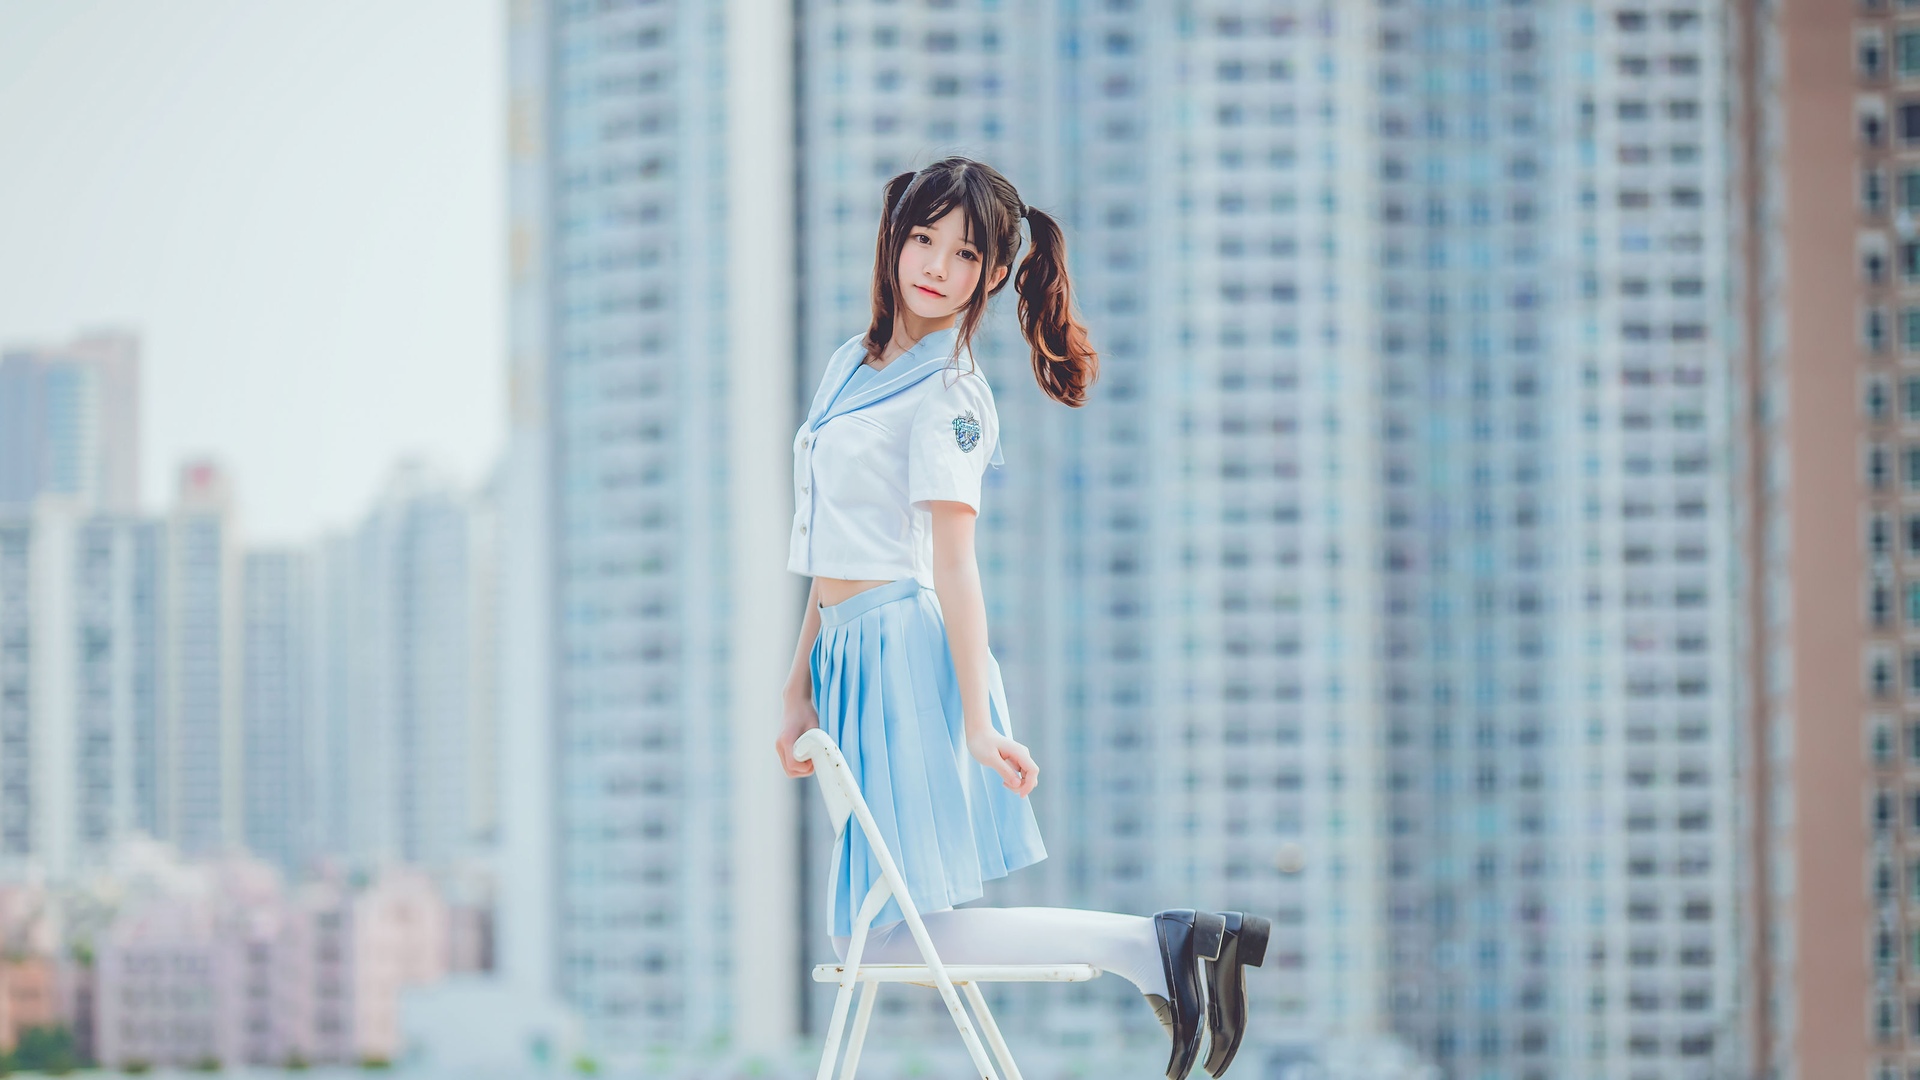 People 1920x1080 CherryNeko women model Asian school uniform women outdoors urban twintails white stockings